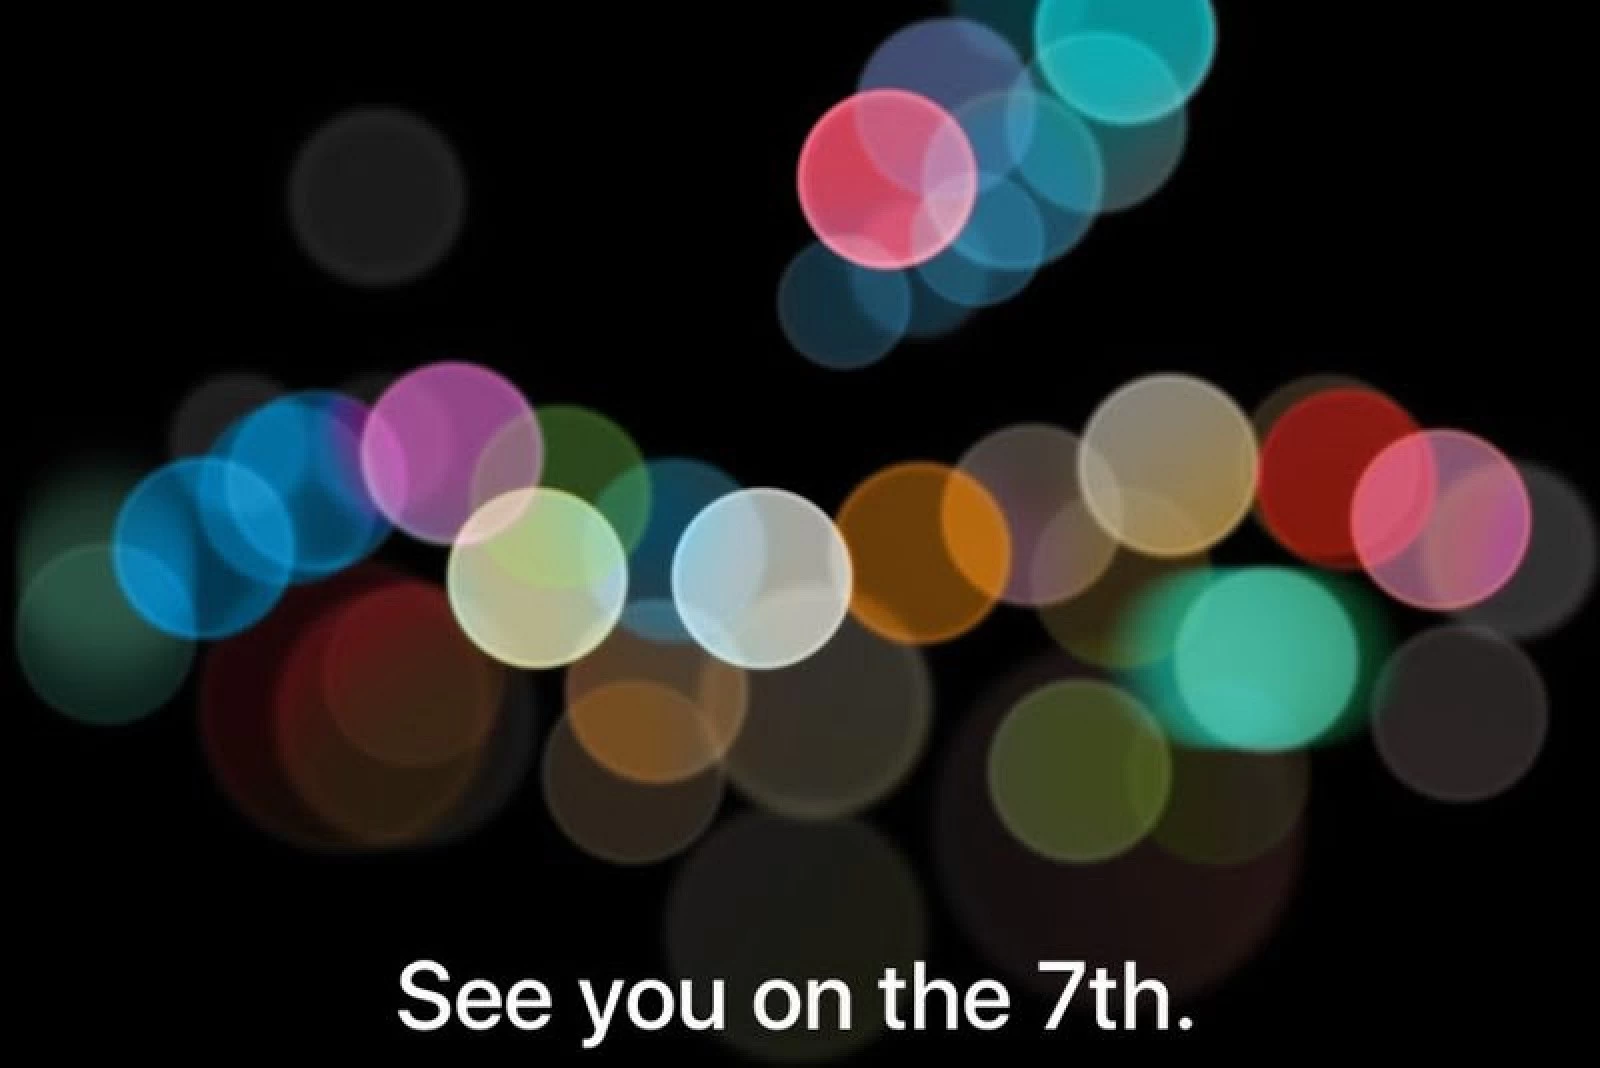 sept 2016 invite | apple | Apple ร่อนบัตรเชิญร่วมงานอีเว้นท์วันที่ 7 กันยายนนี้ เตรียมเปิดตัว iPhone 7 อย่างเป็นทางการ